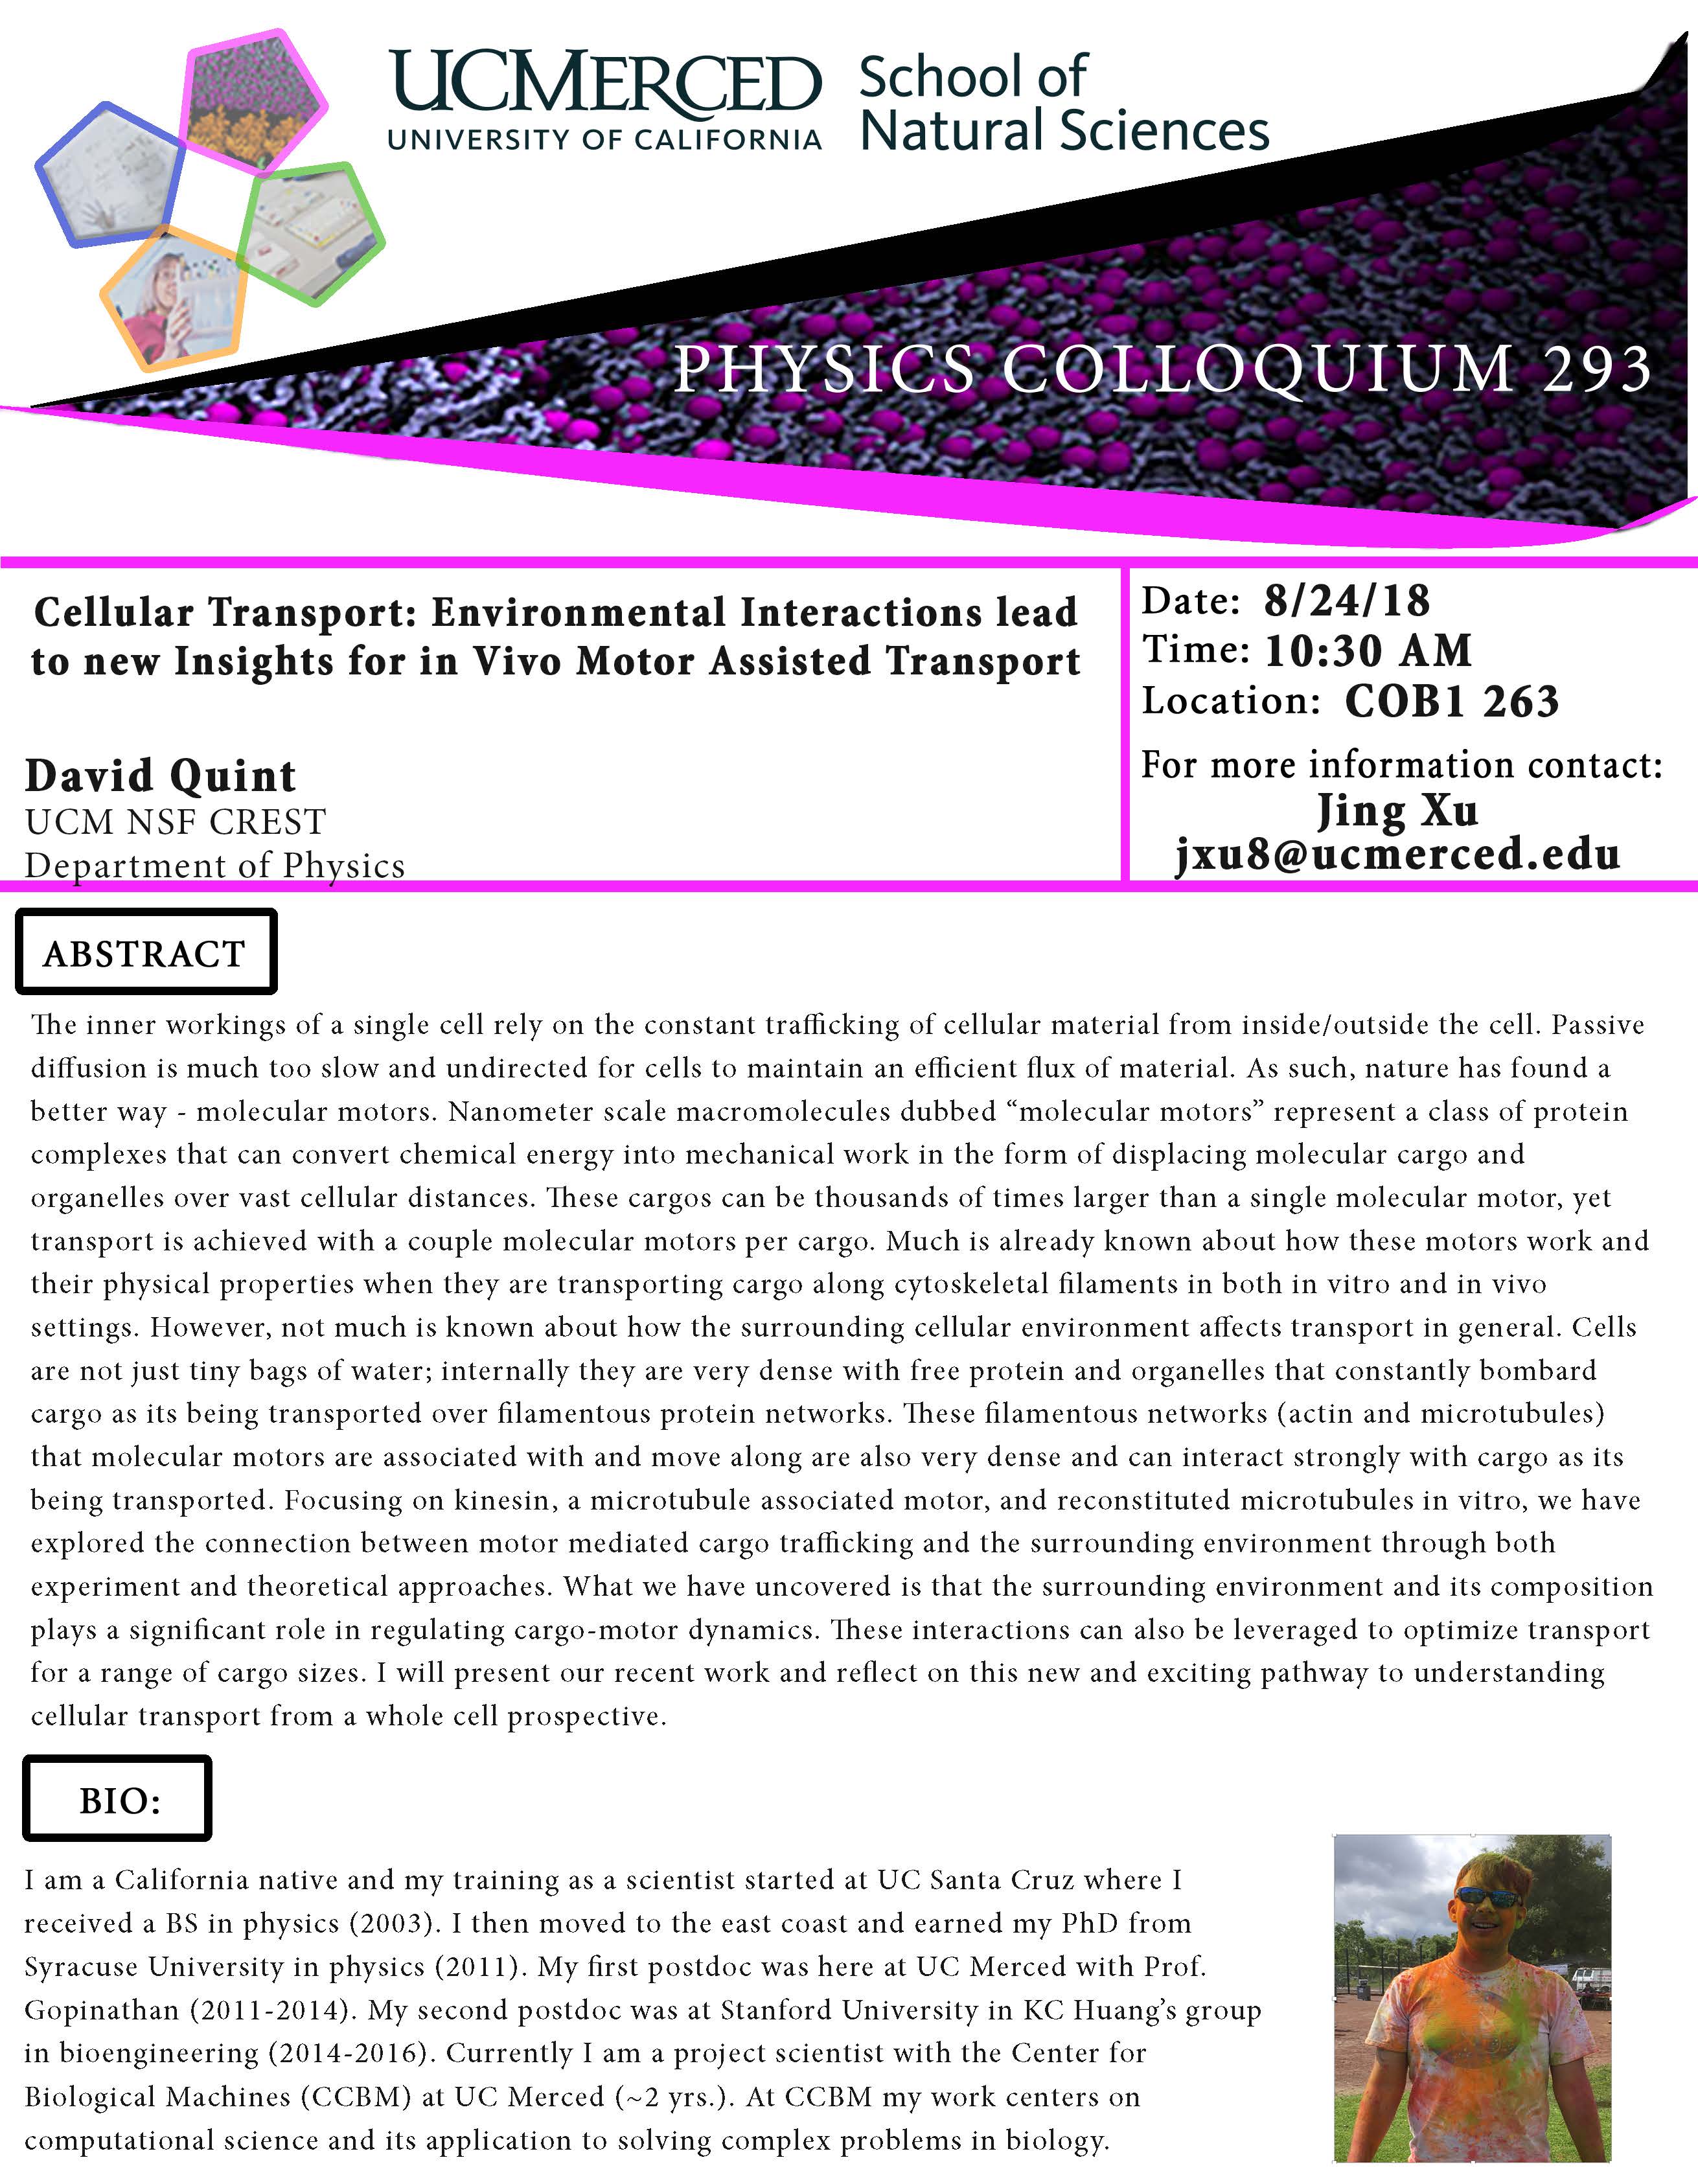 Physics Colloquia 293 (8/24/18)